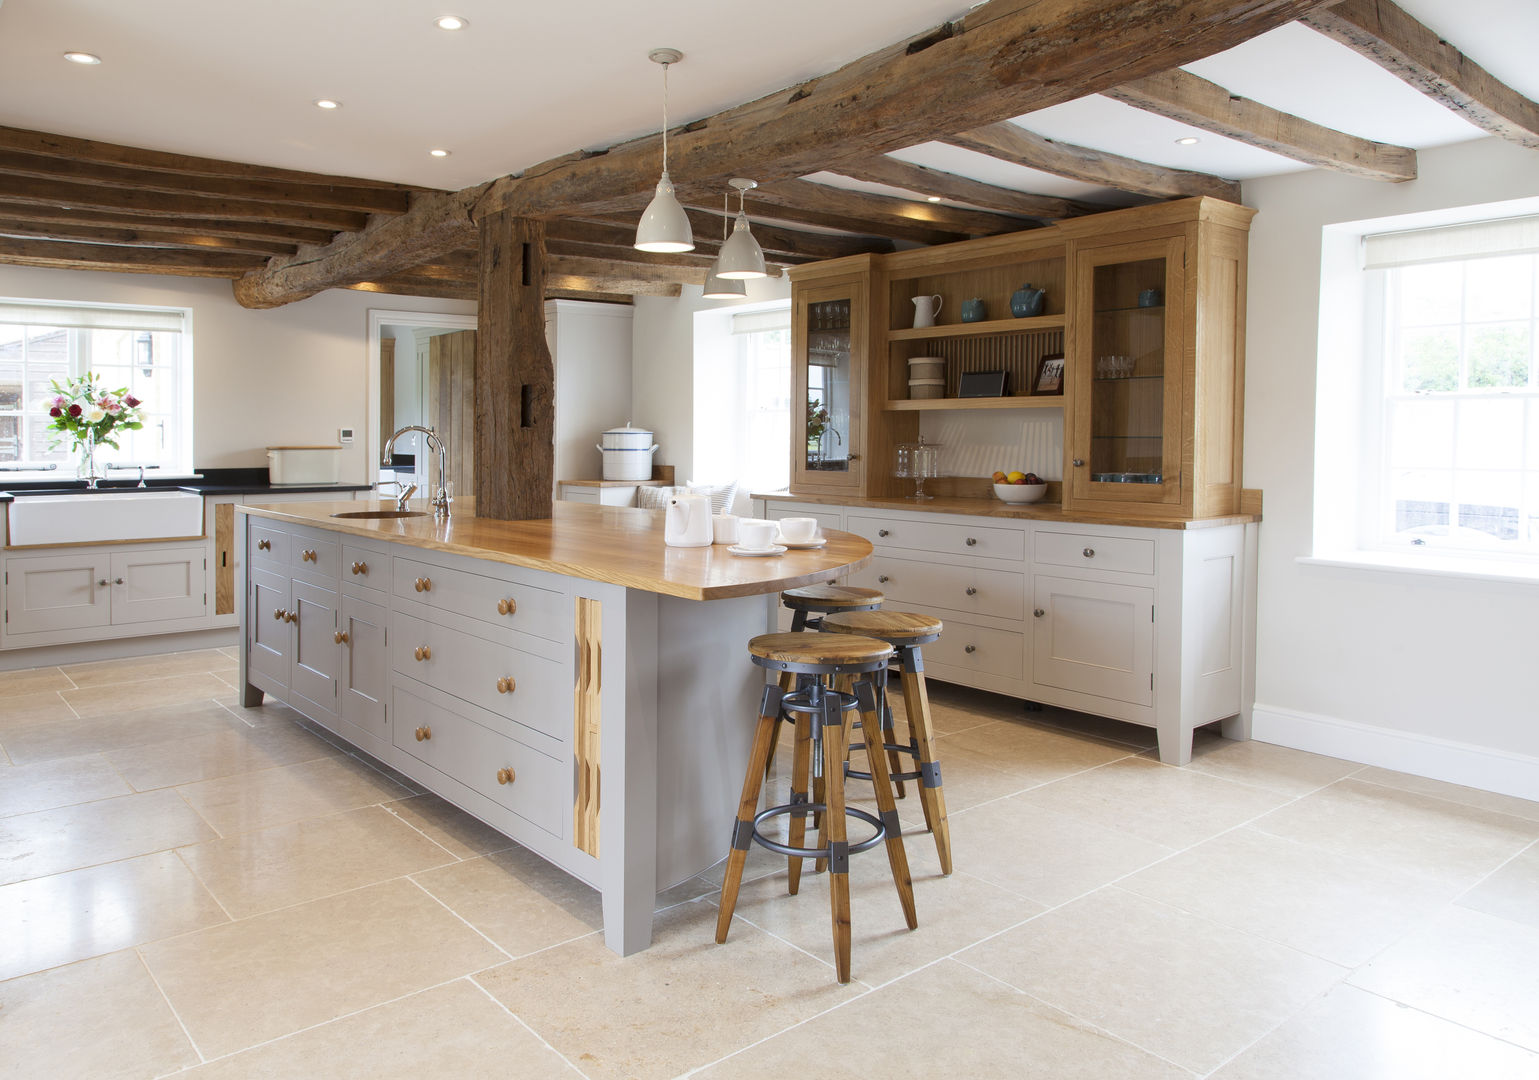 Old English - Bespoke kitchen project in Cambridgeshire Baker & Baker Cocinas rústicas dresser,kitchen island,seating,tile flooring,beams,lighting